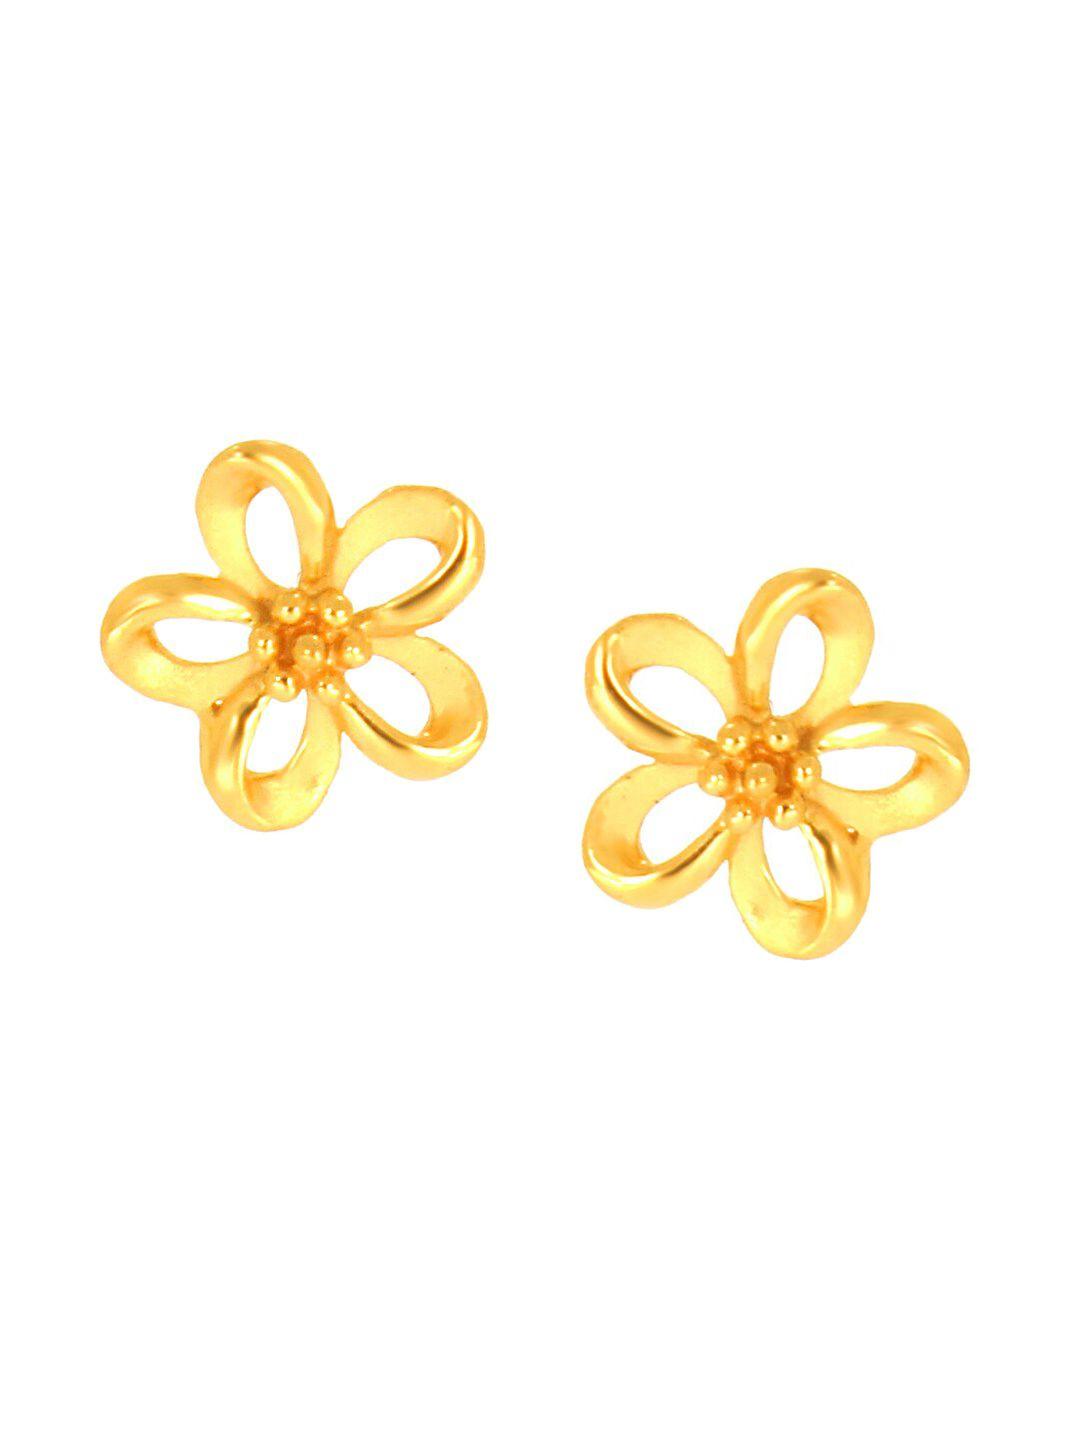 senco-graceful-floral-22kt-gold-stud-earrings-1.6gm